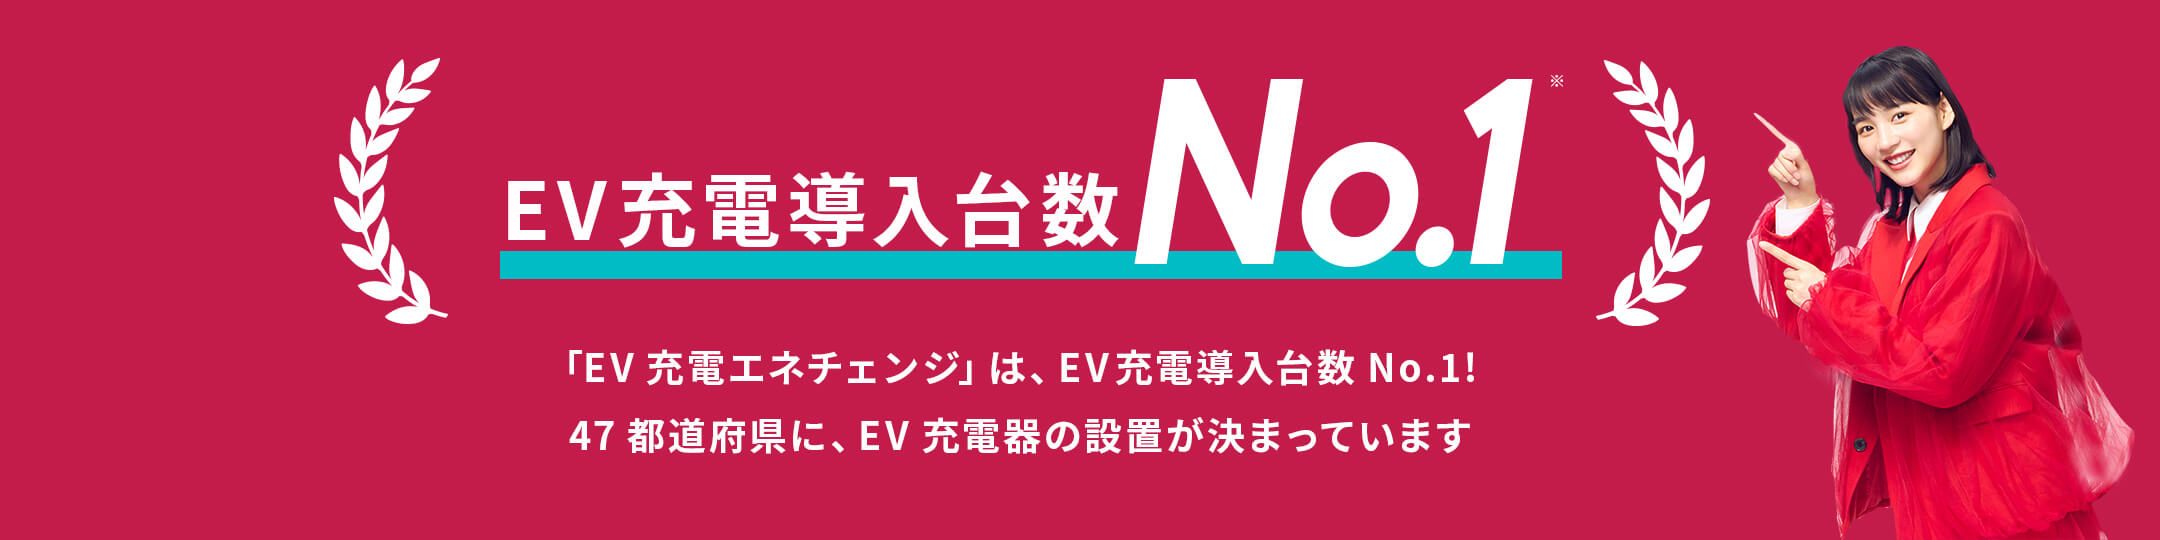 EV充電導入台数No.1